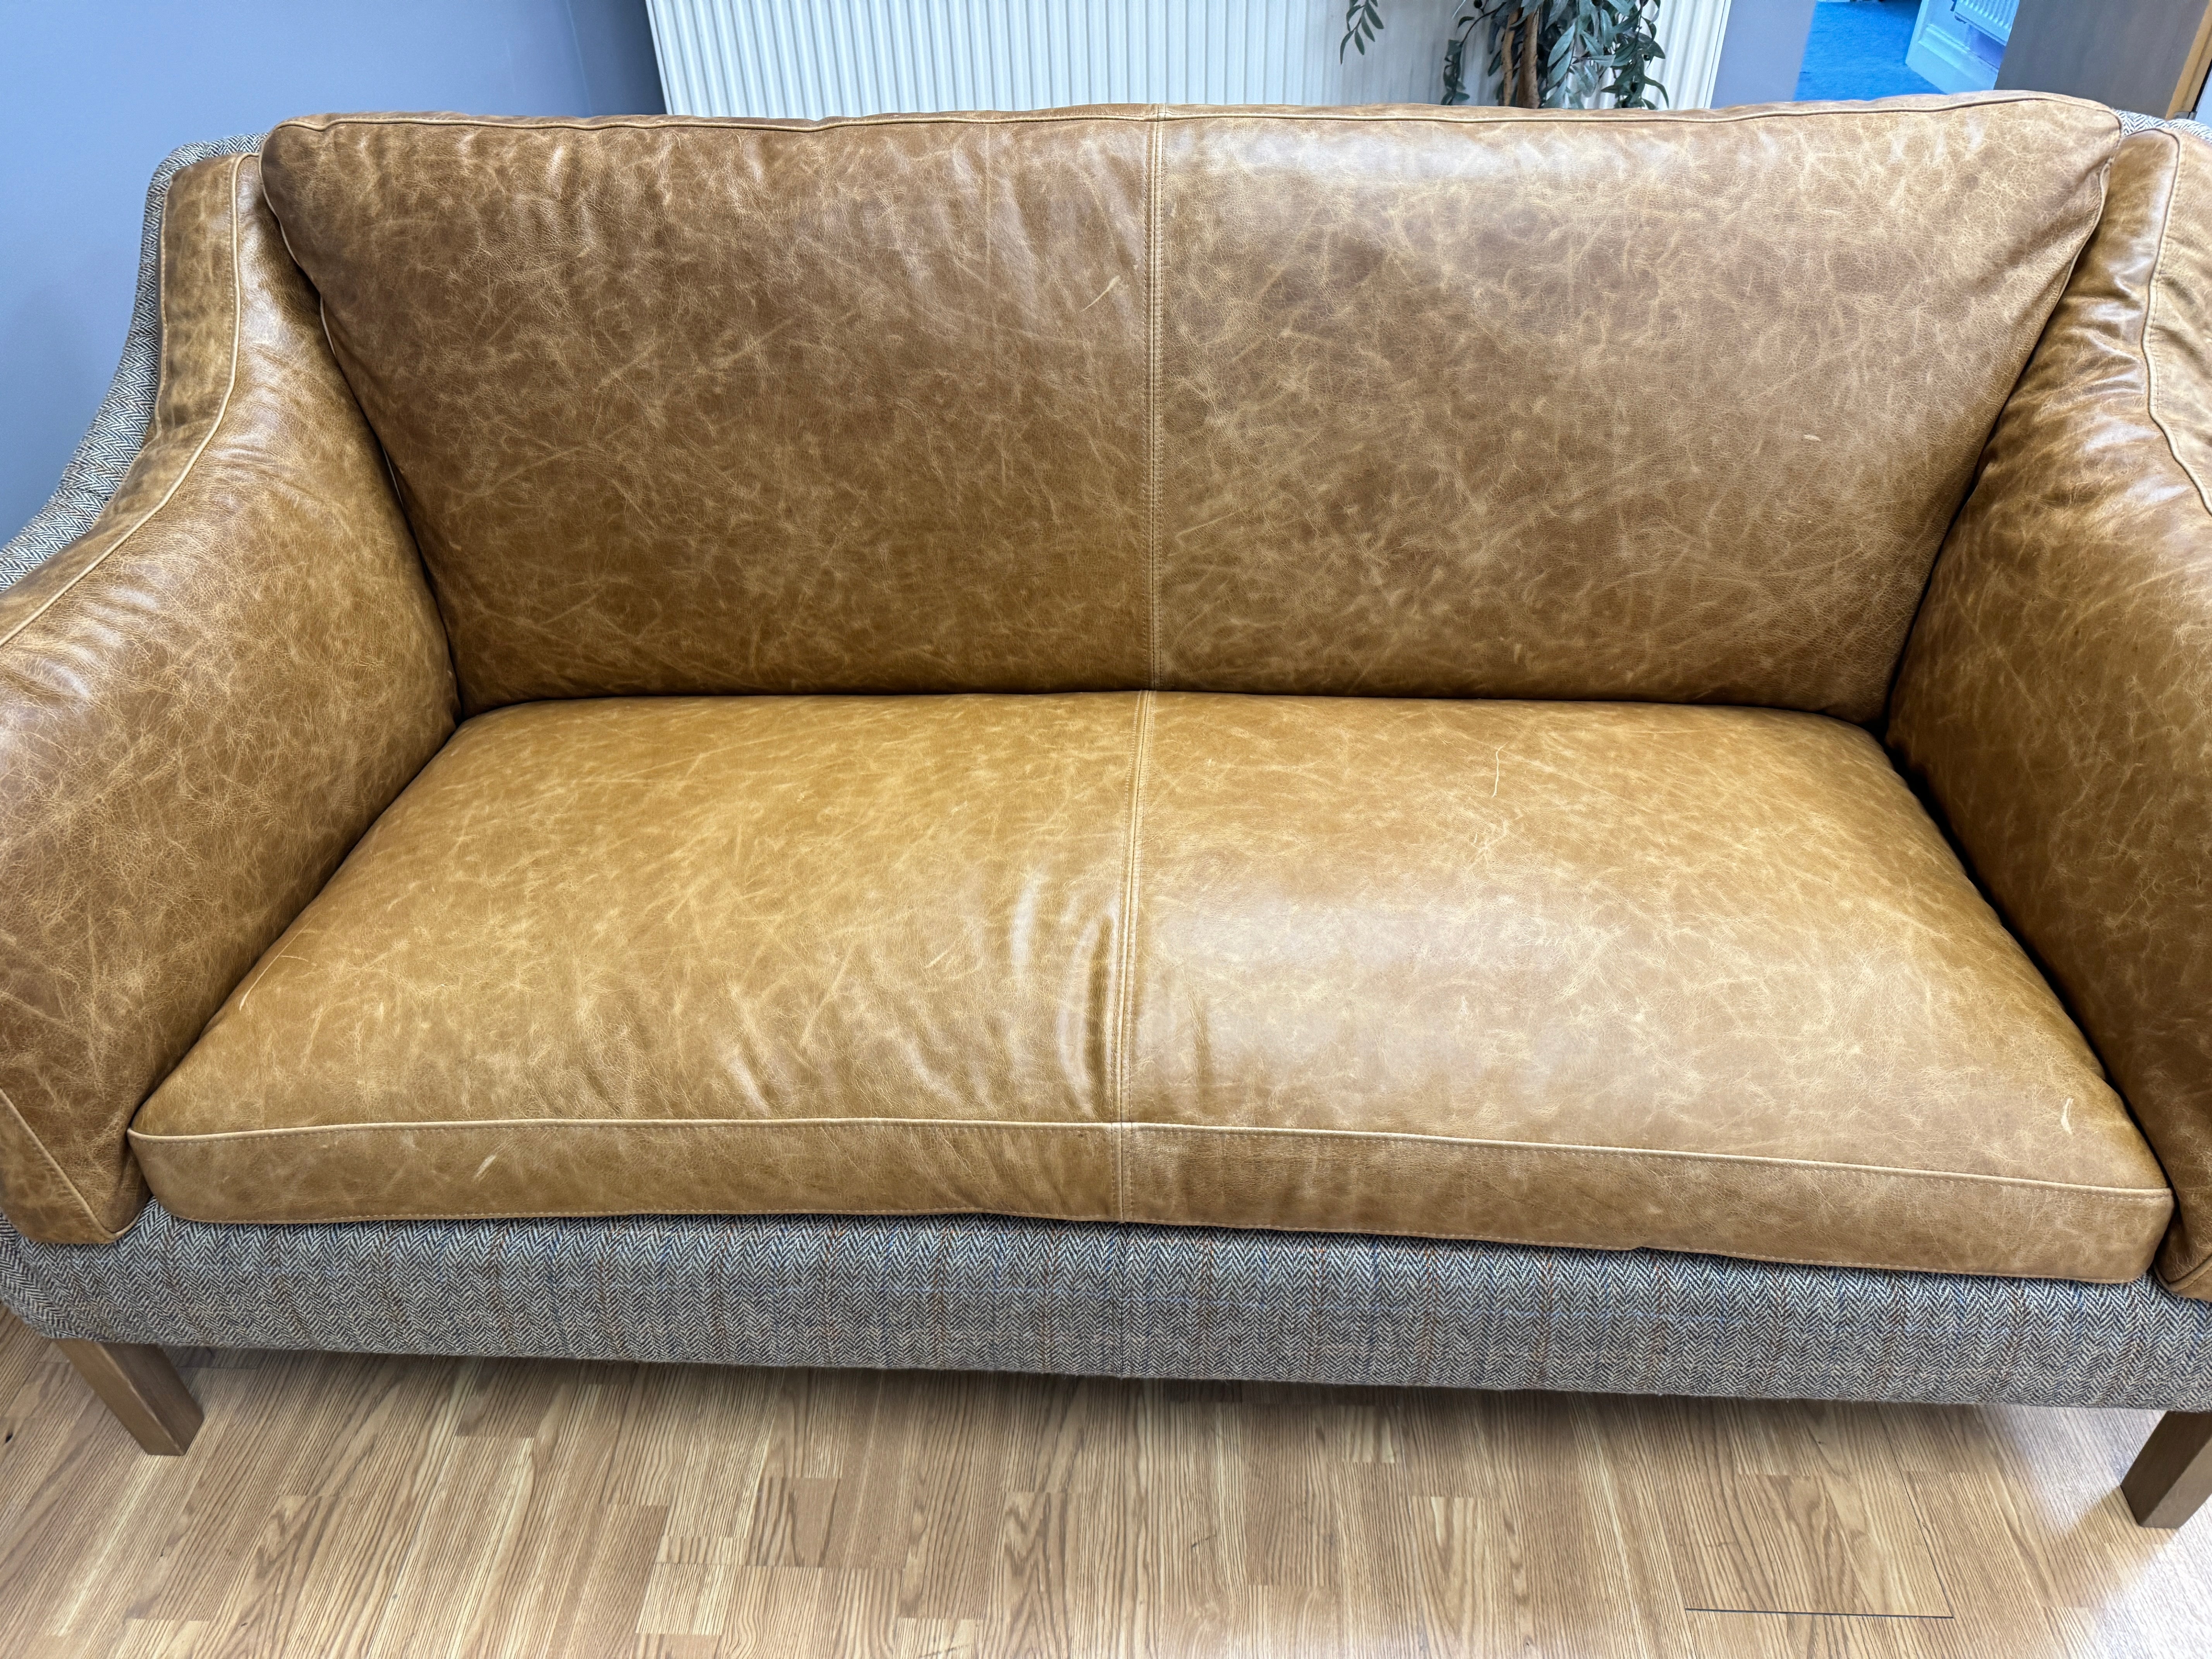 VINTAGE SOFA CO MALONE 2 Seater Large Sofa in Tan Leather & Harris Tweed fabric